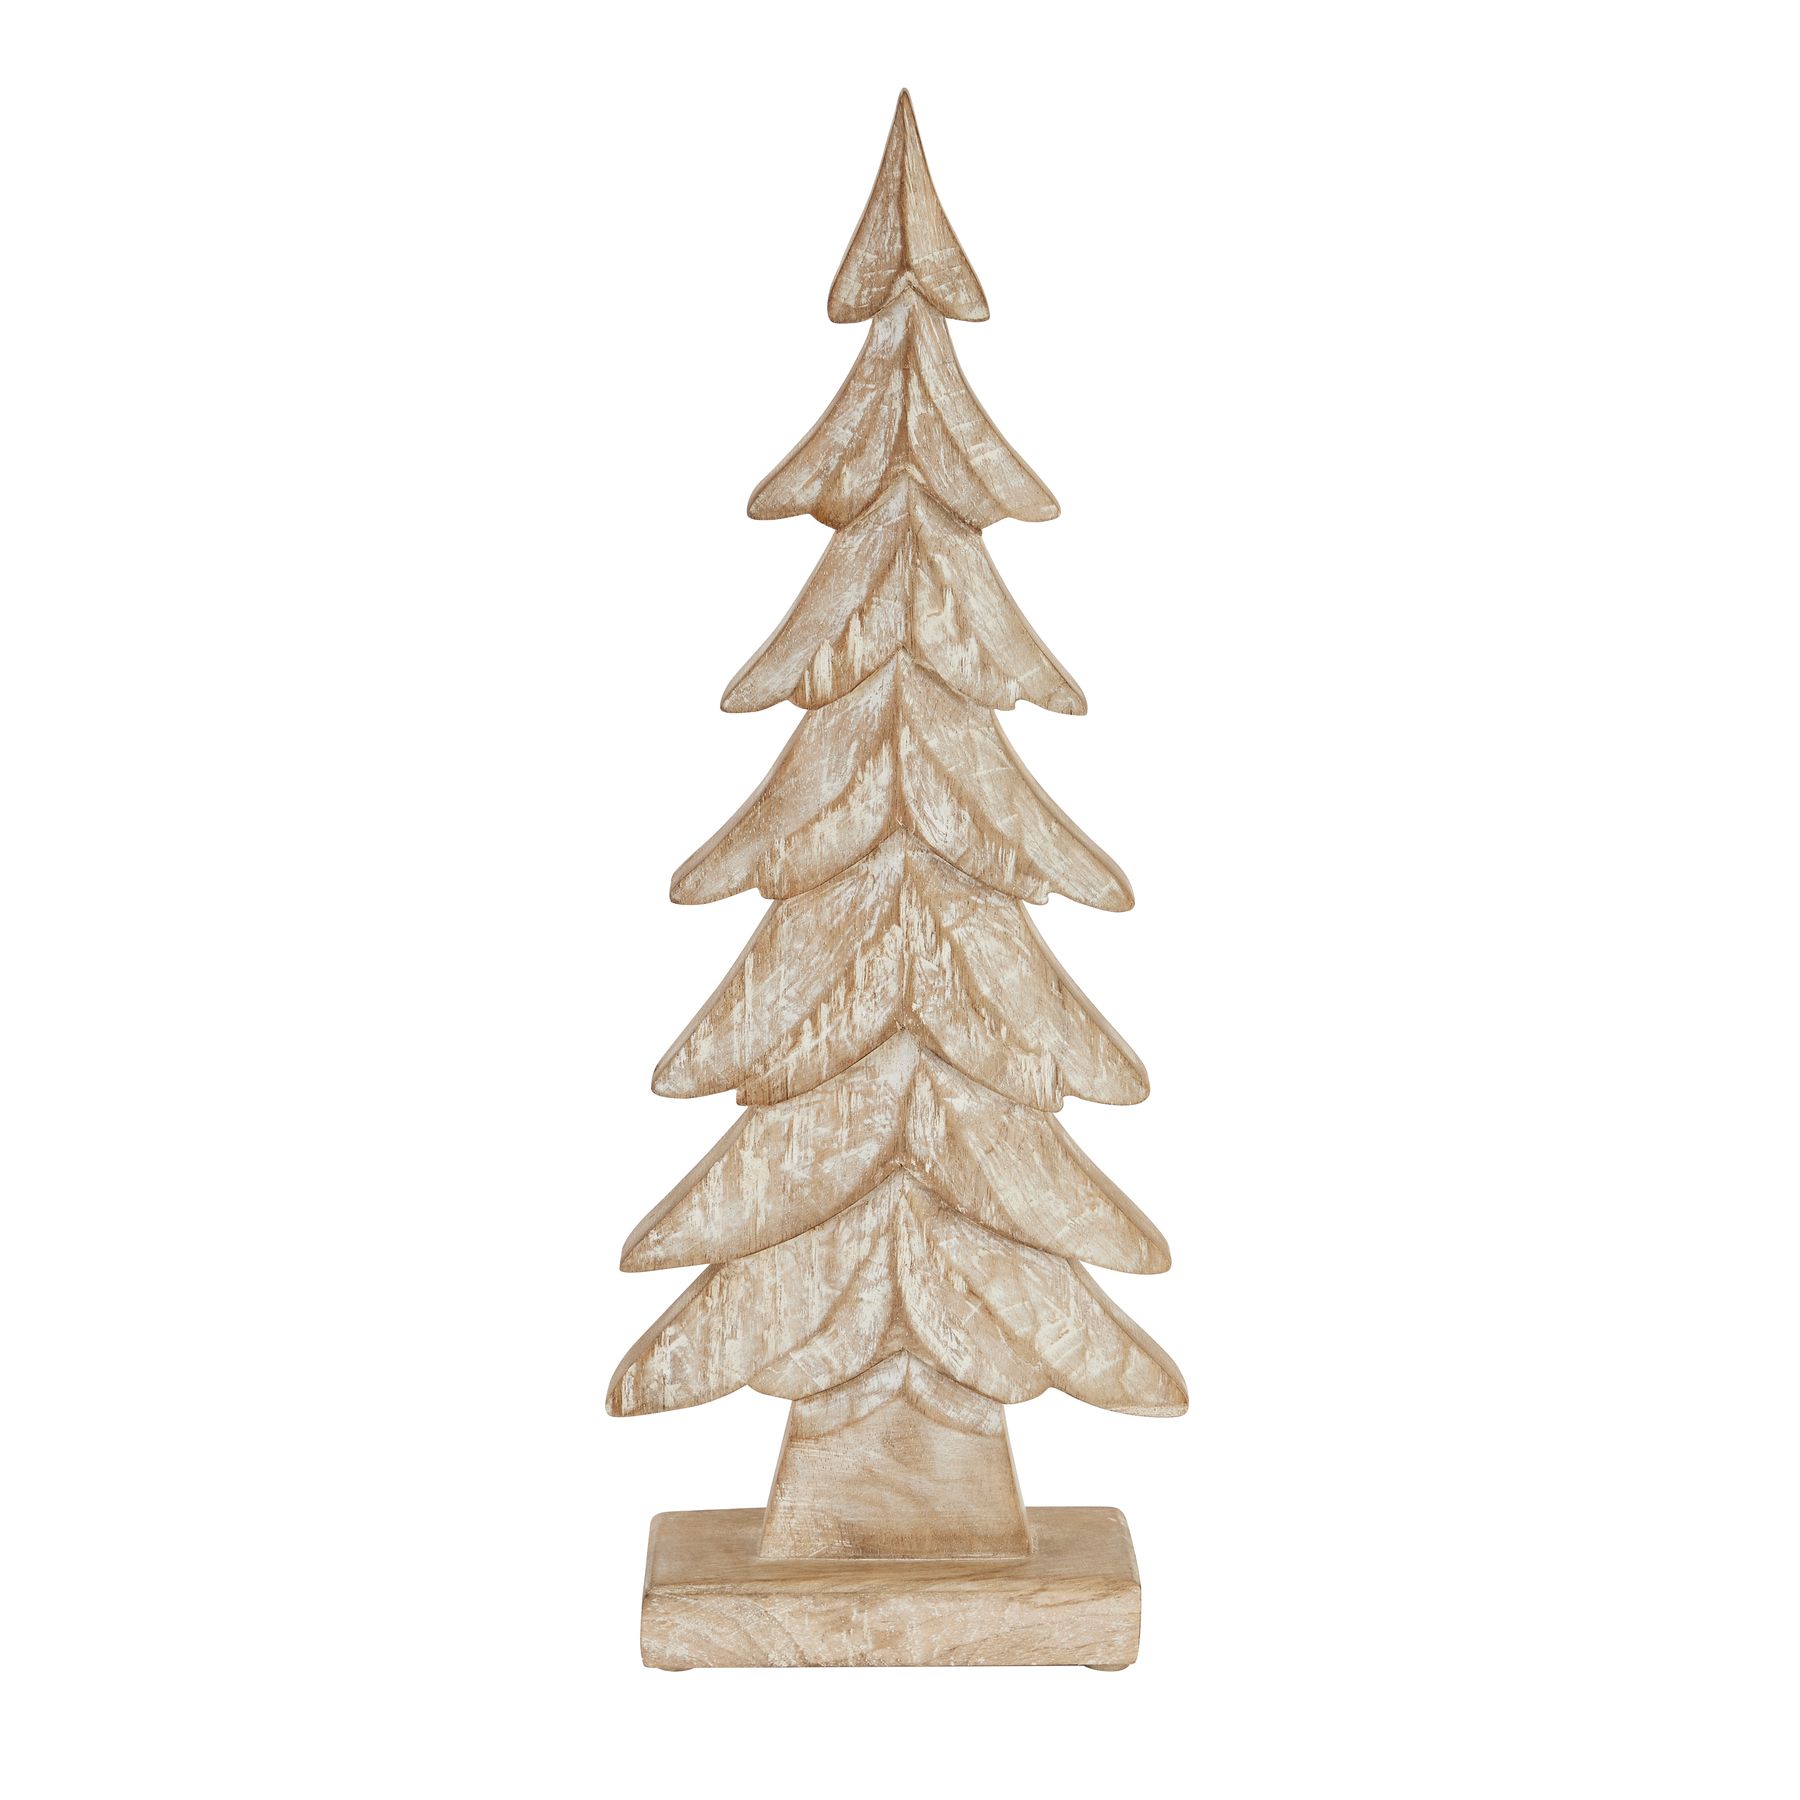 Carved Wood Large Christmas Tree - Image 1